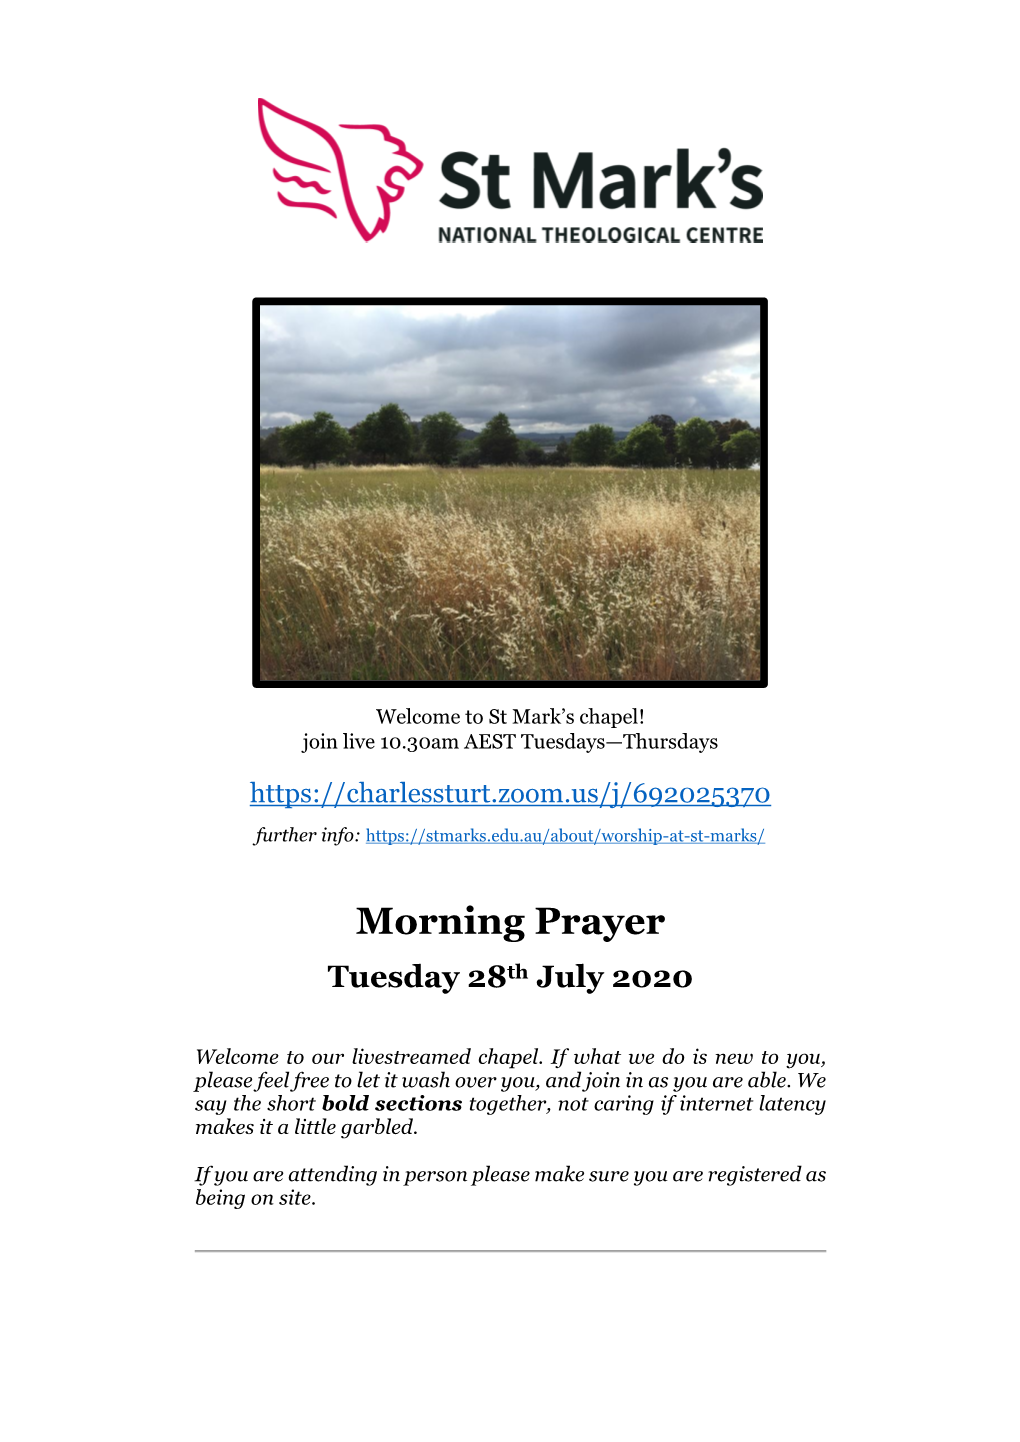 Morning Prayer Tuesday 28Th July 2020